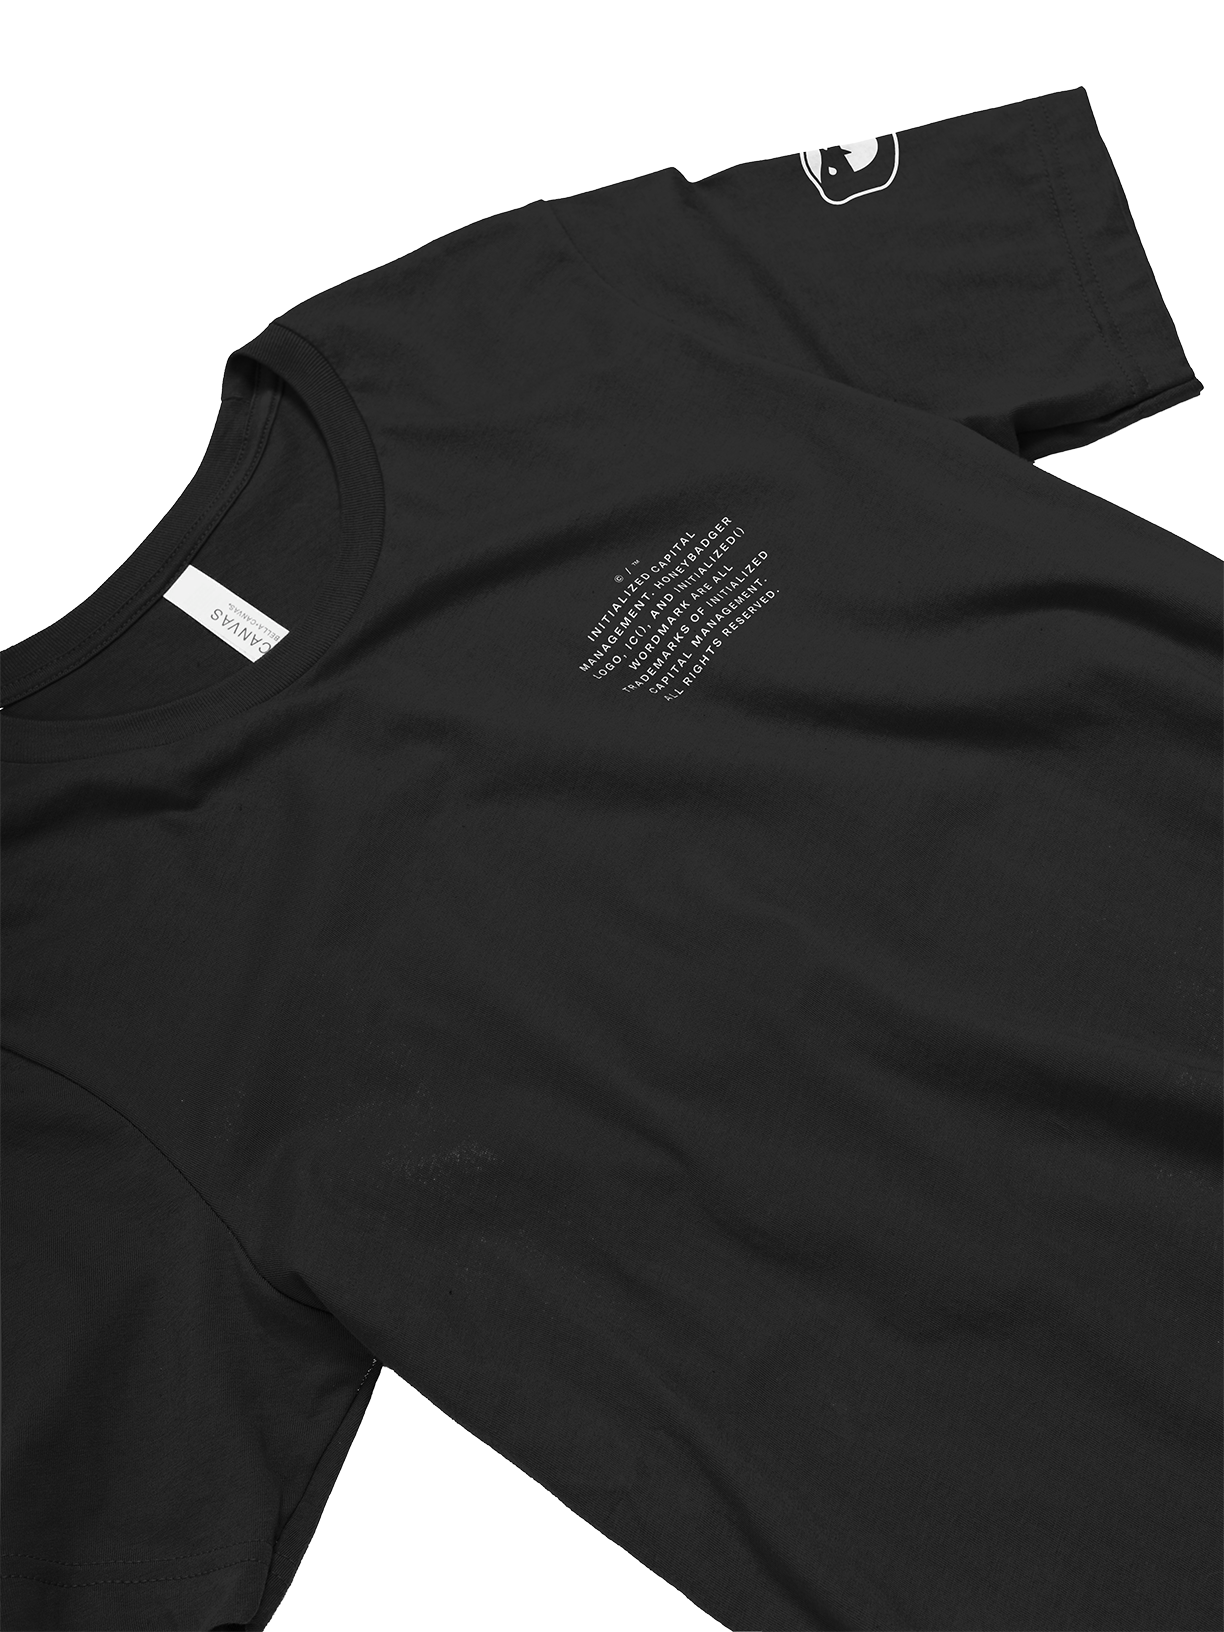 Initialized Merch - Initialized Trademark T-shirt